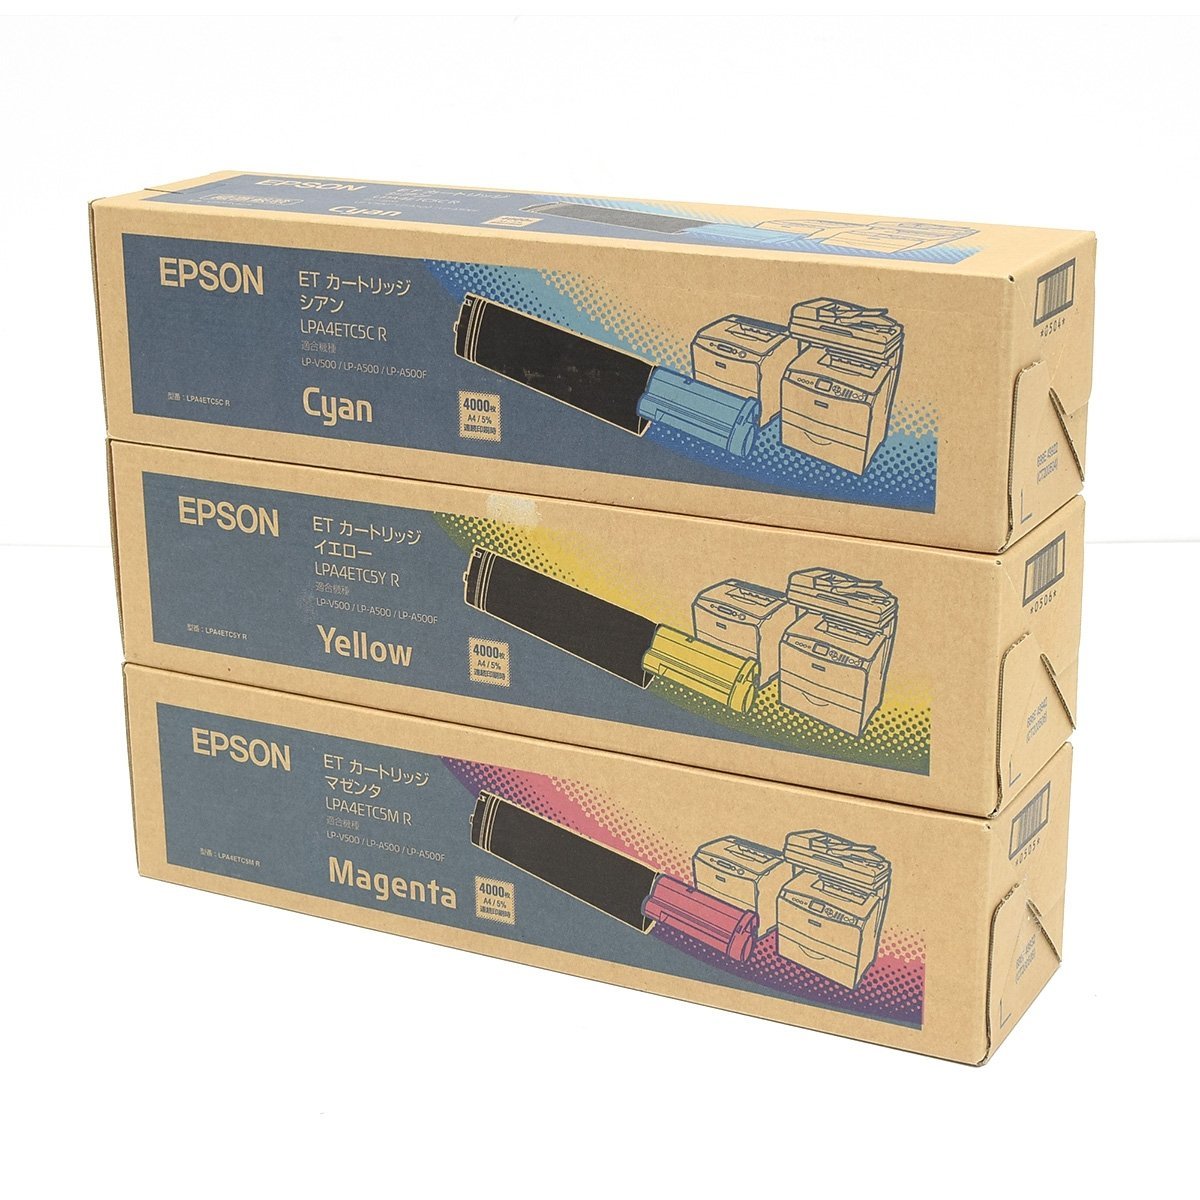 v357923 unused EPSON Epson original toner cartridge ET cartridge long-term storage yellow Cyan magenta LP-V500 LP-A500 LP-A500 for 